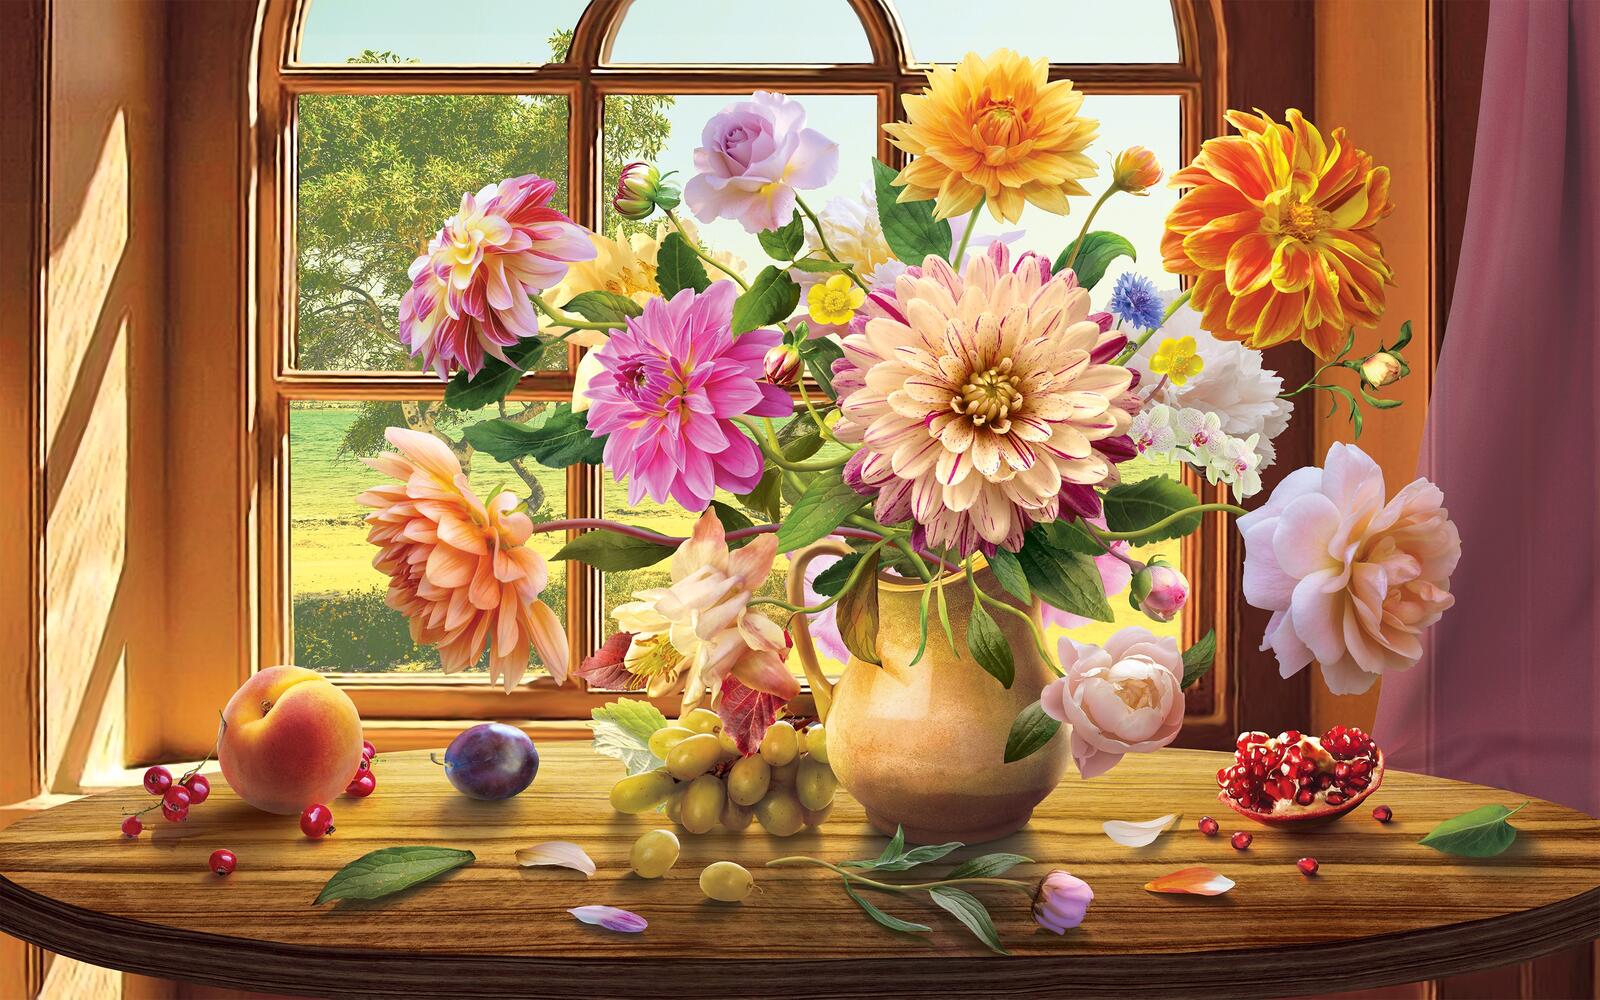 Wallpapers window table vase on the desktop